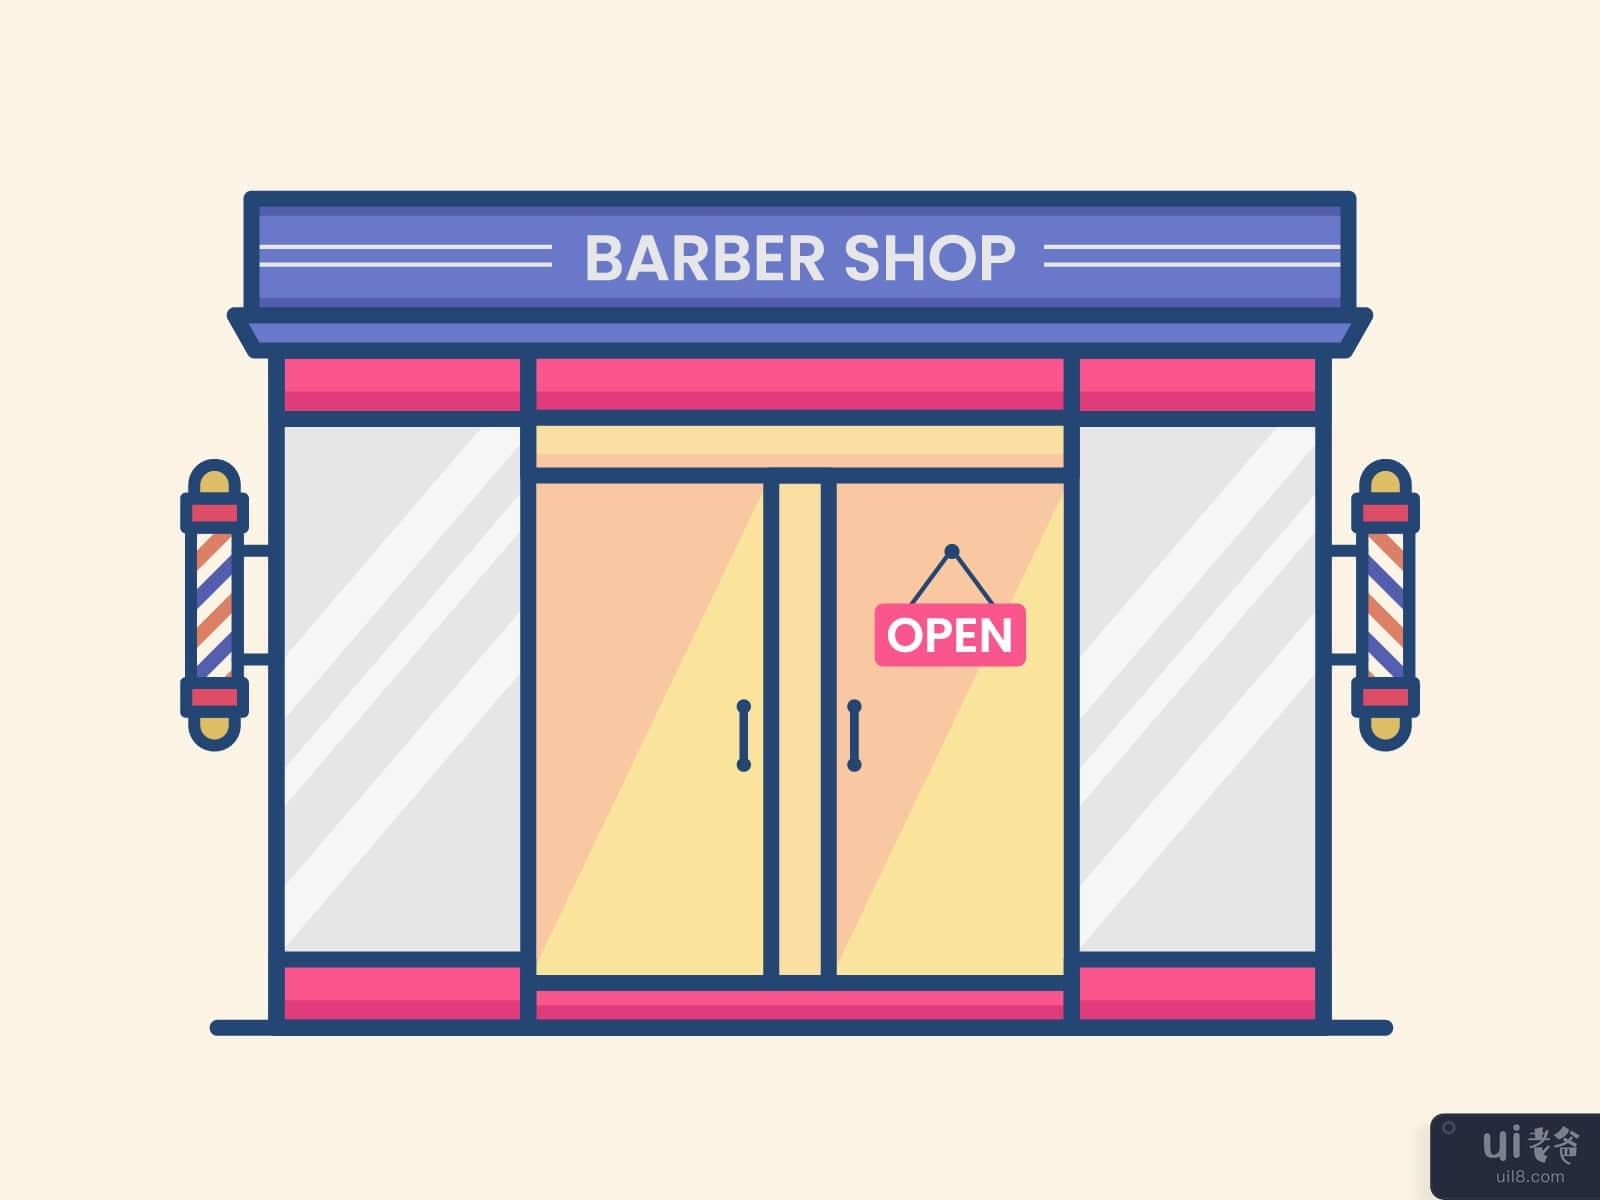 Barbershop vector illustration